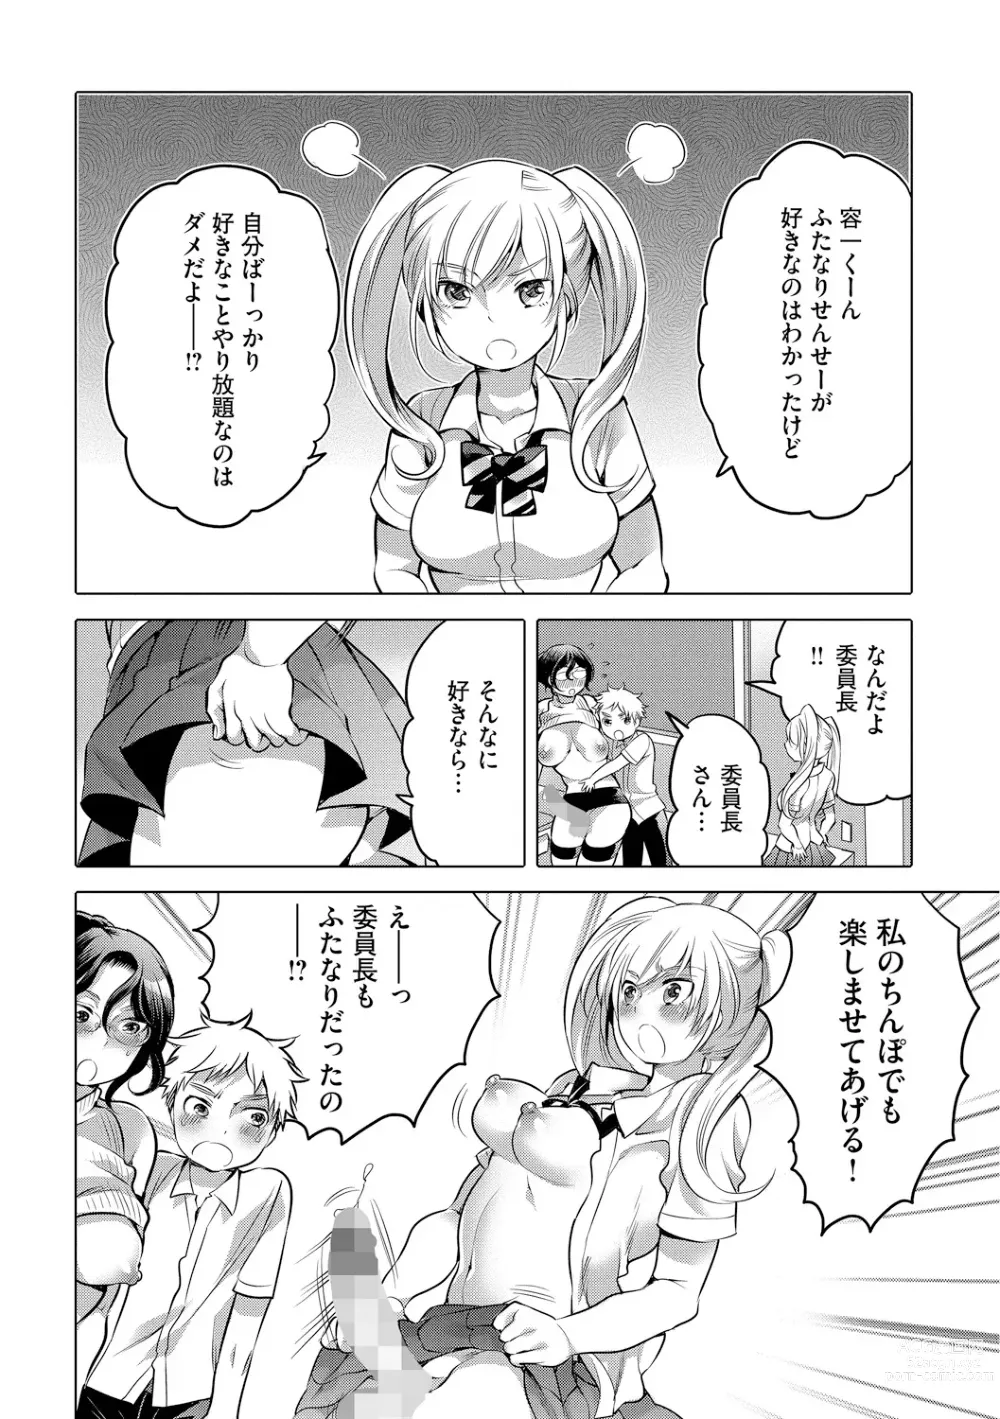 Page 184 of manga Futanari Onee-chan wa Bokura no Omocha  - FUTANARI SISTER IS OUR TOYS